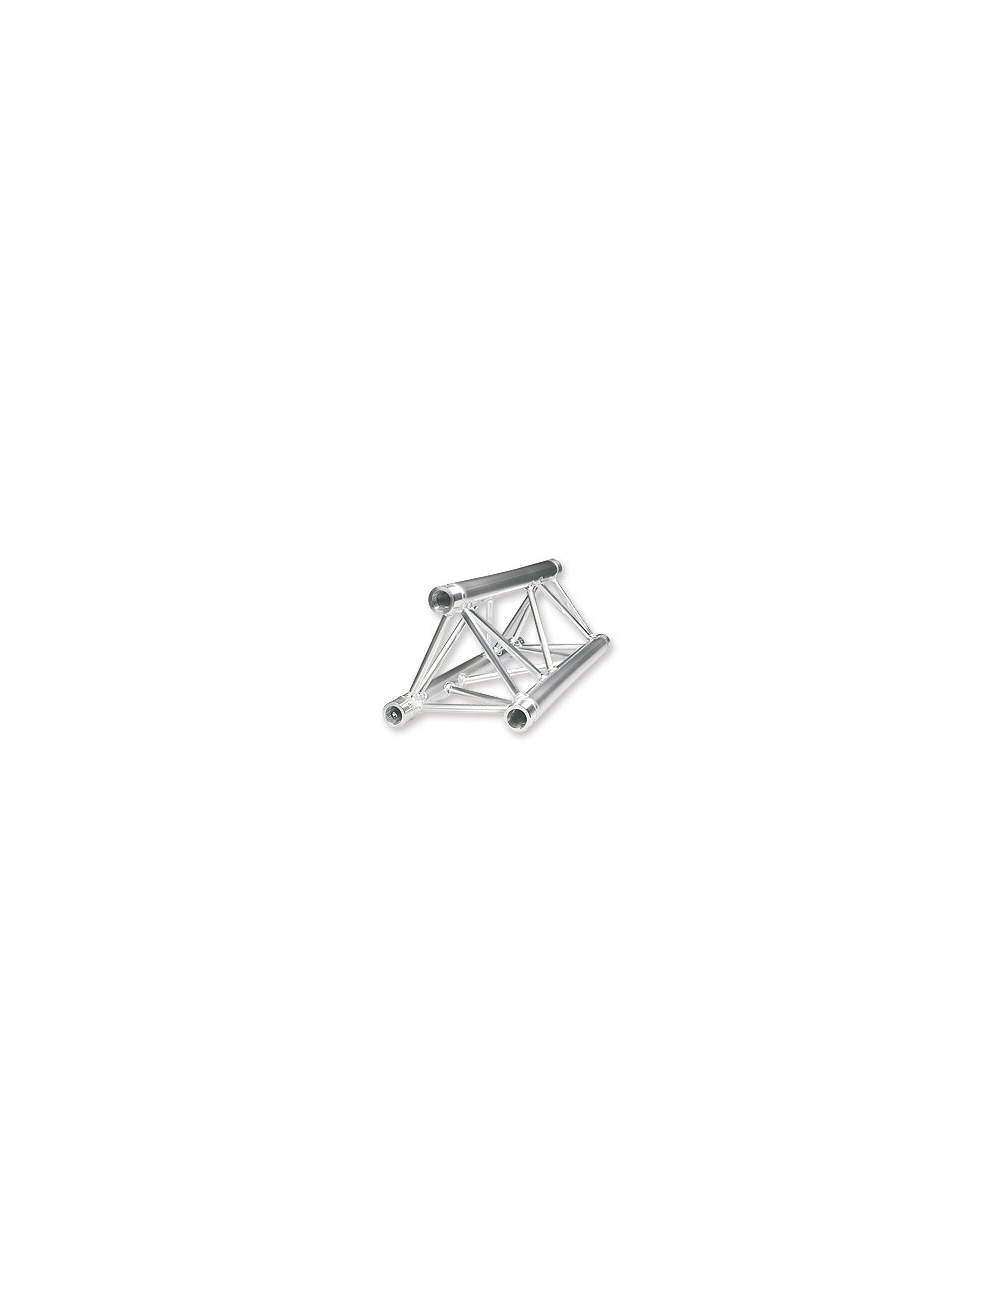 Triangular structure 290 ASD 2m- SX29200